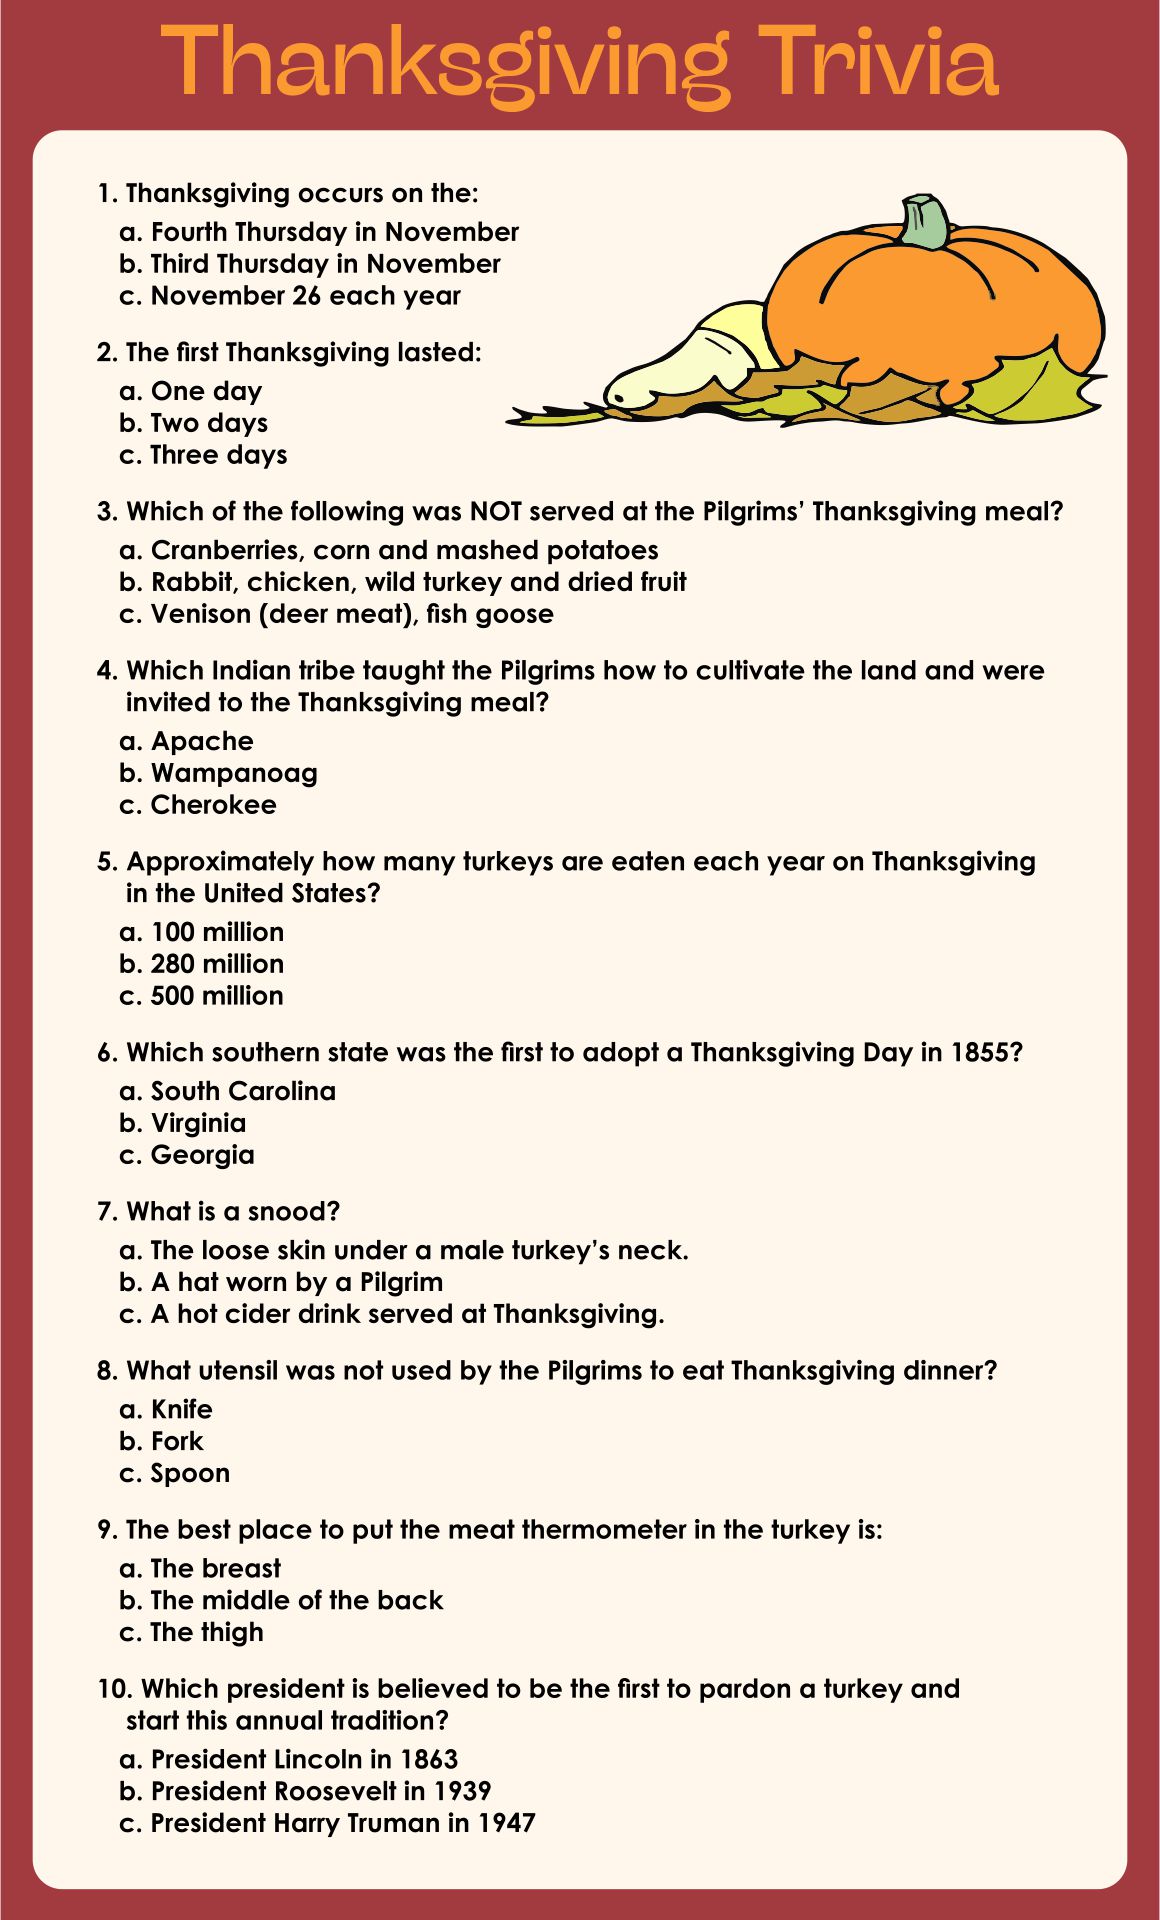 Thanksgiving Trivia Questions